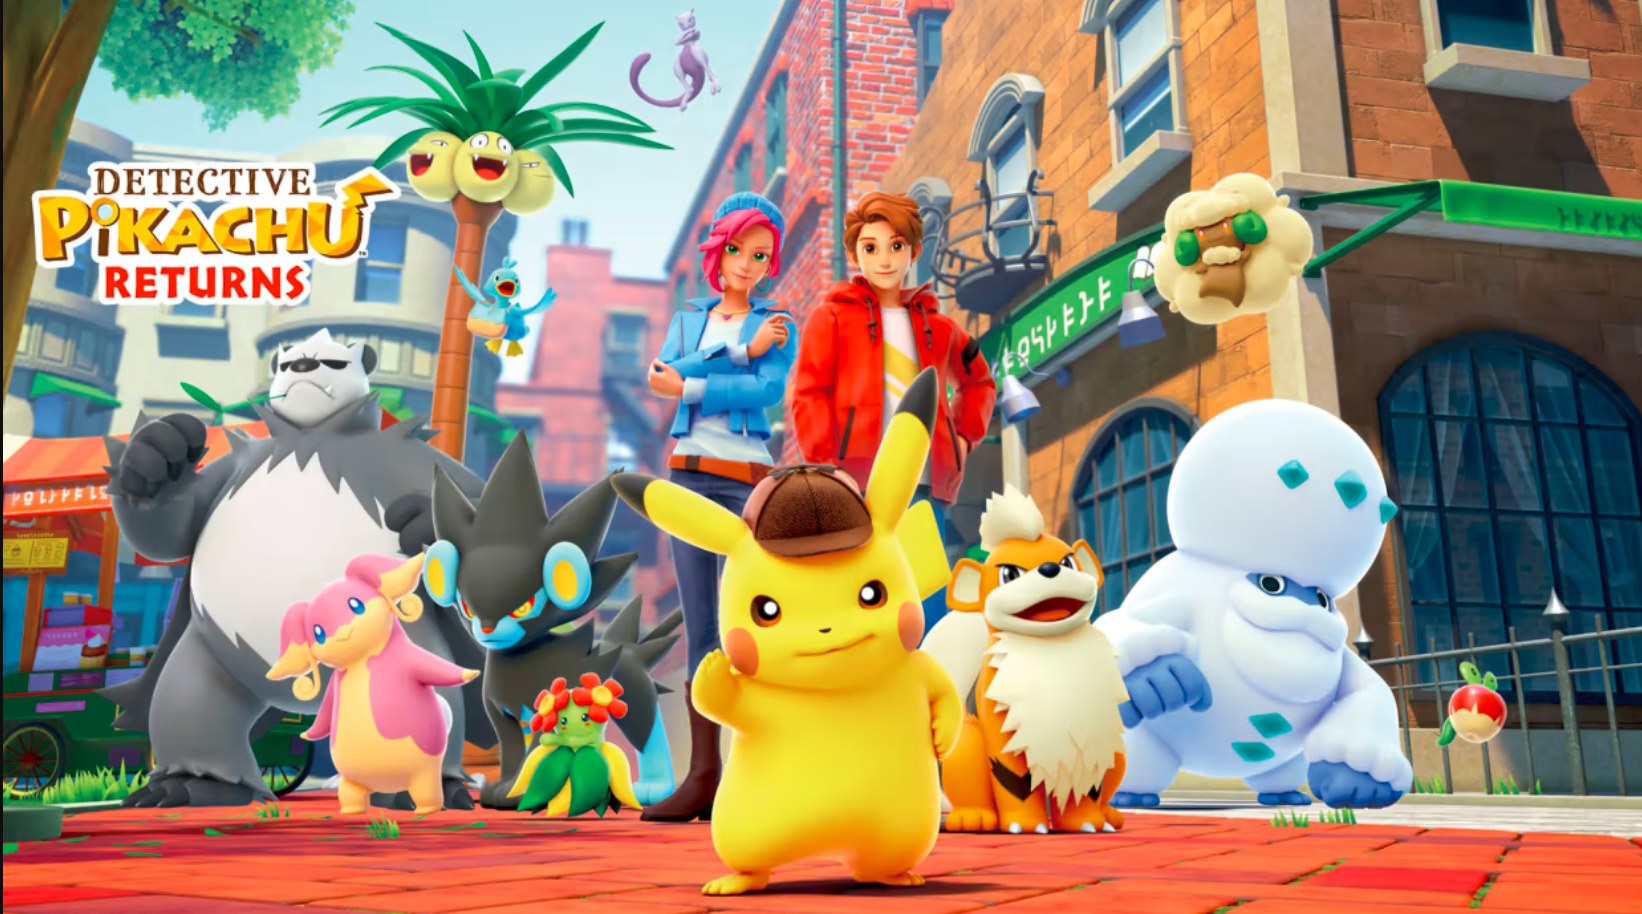 Detective Pikachu Returns Dealt With Mature Themes In The Pokémon Universe